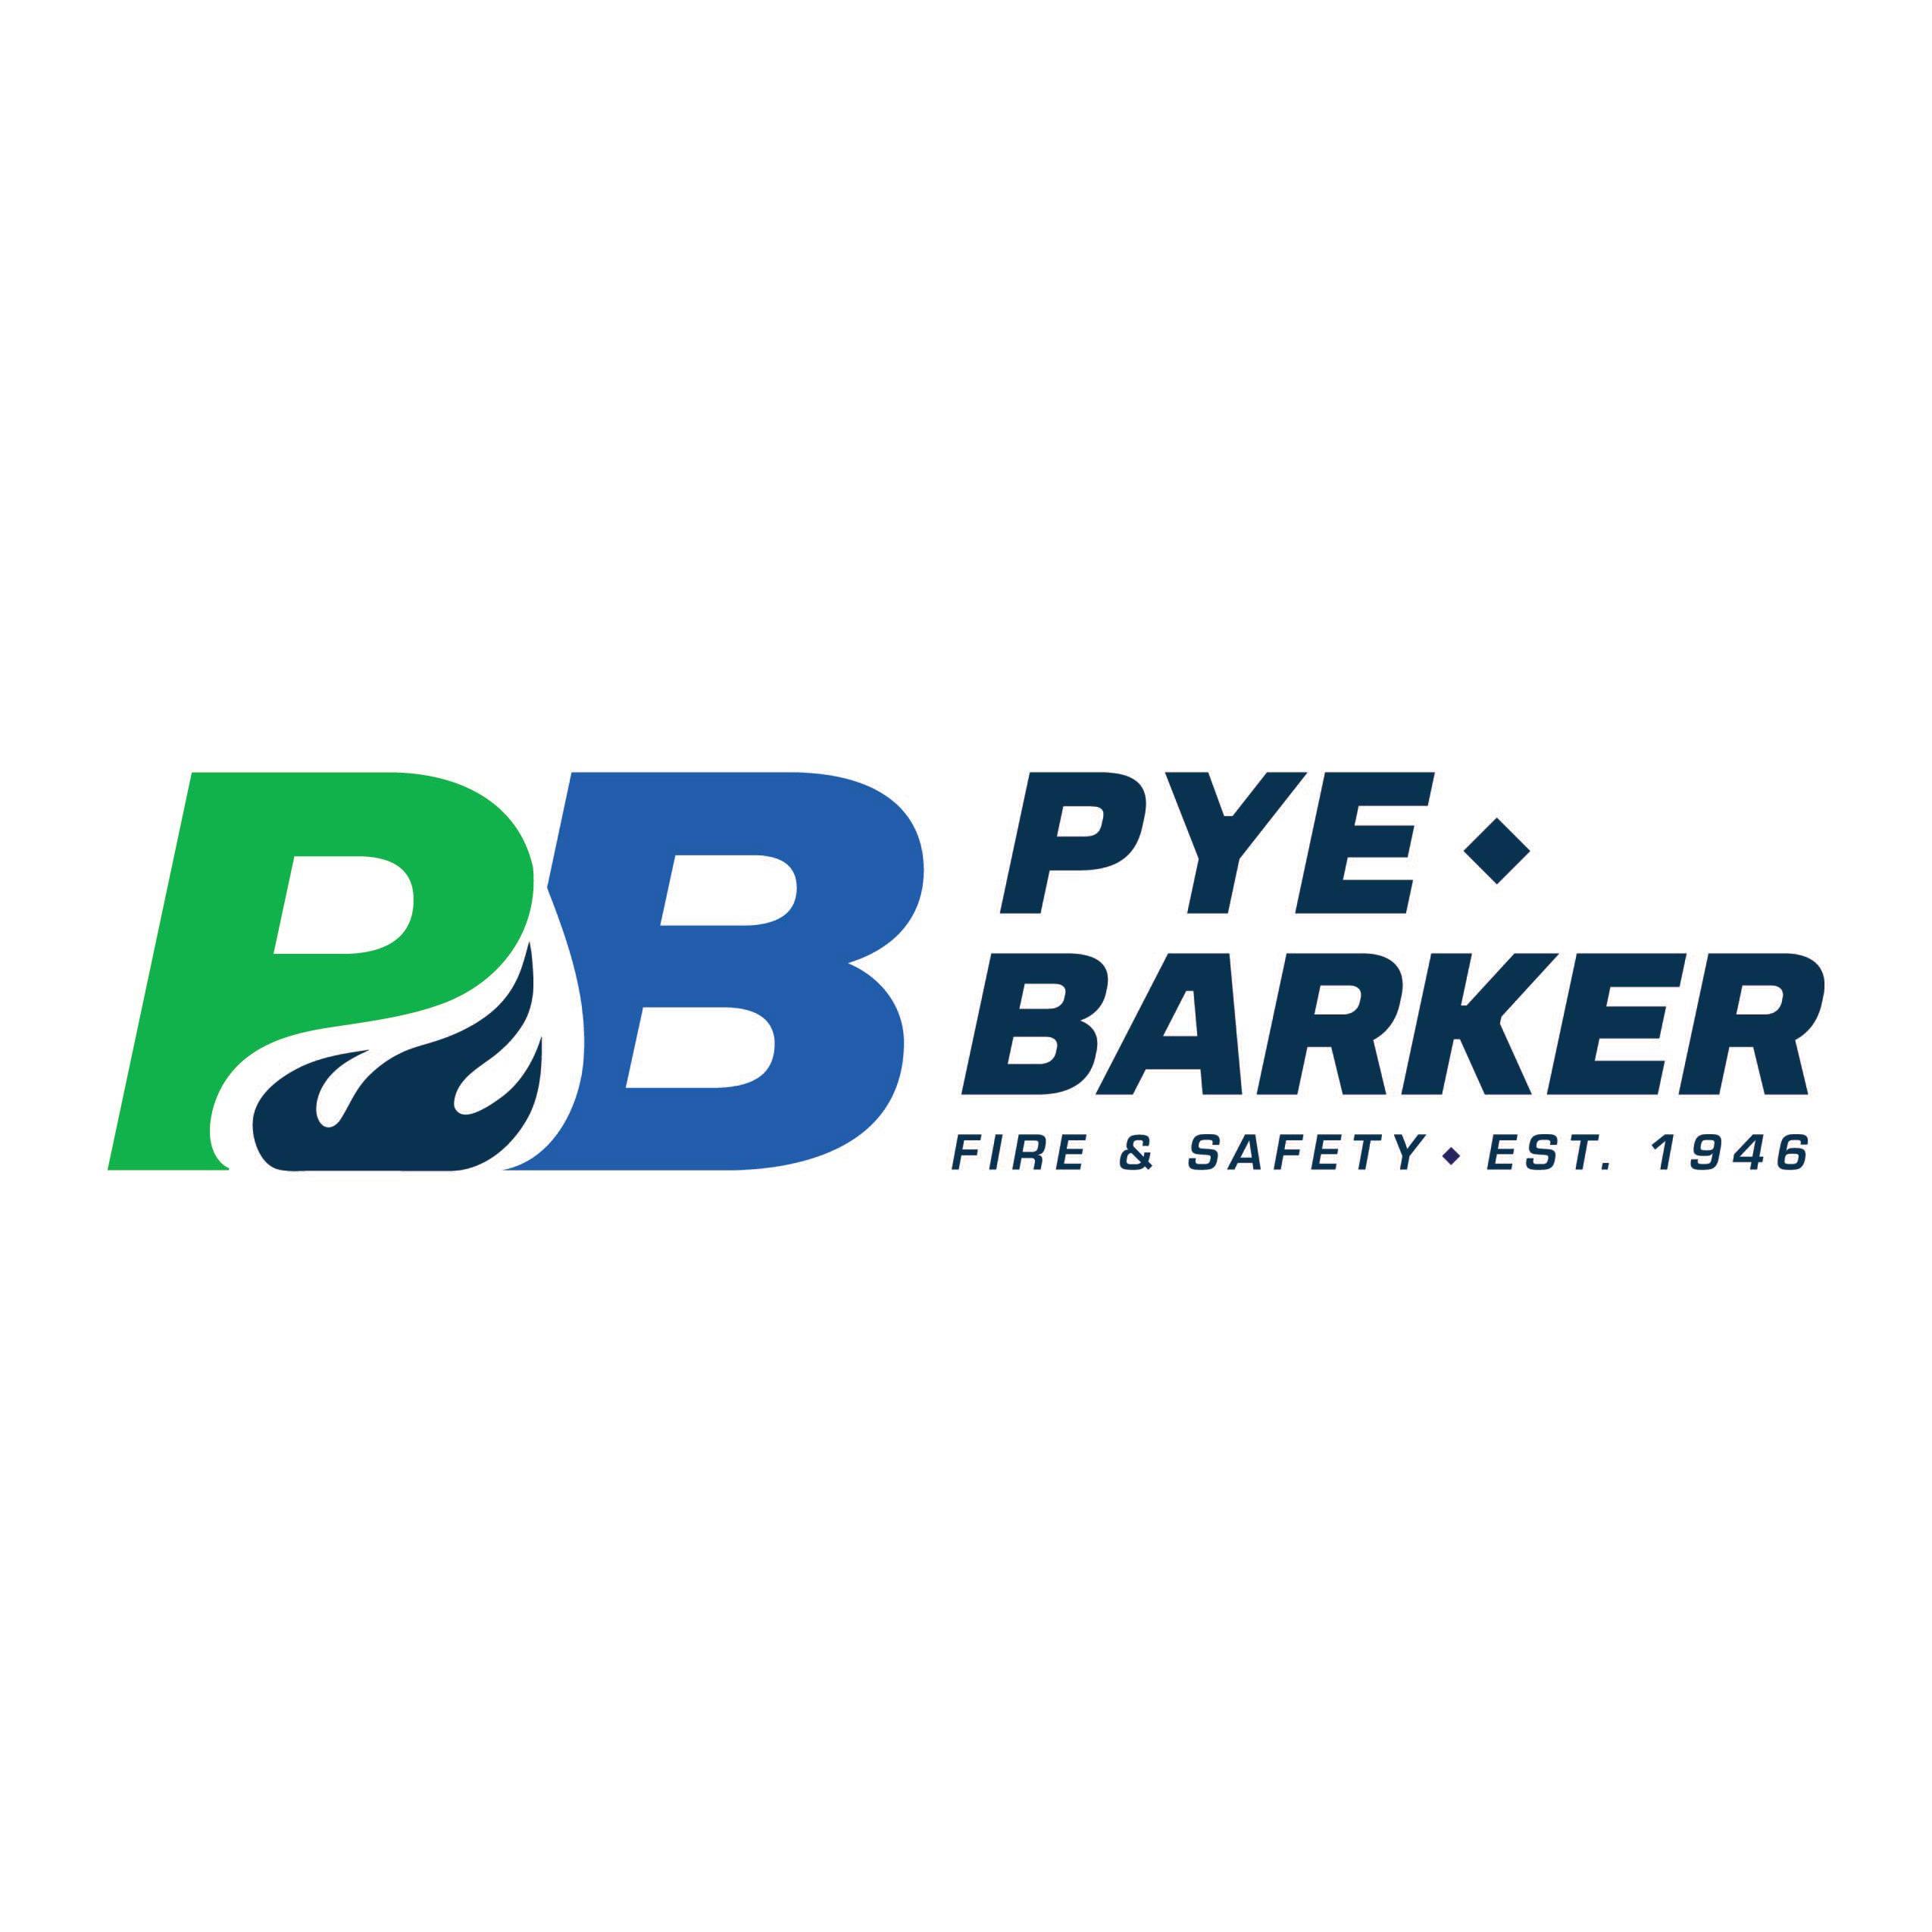 Pye-Barker Fire & Safety - Sarasota, FL 34236 - (941)366-6370 | ShowMeLocal.com